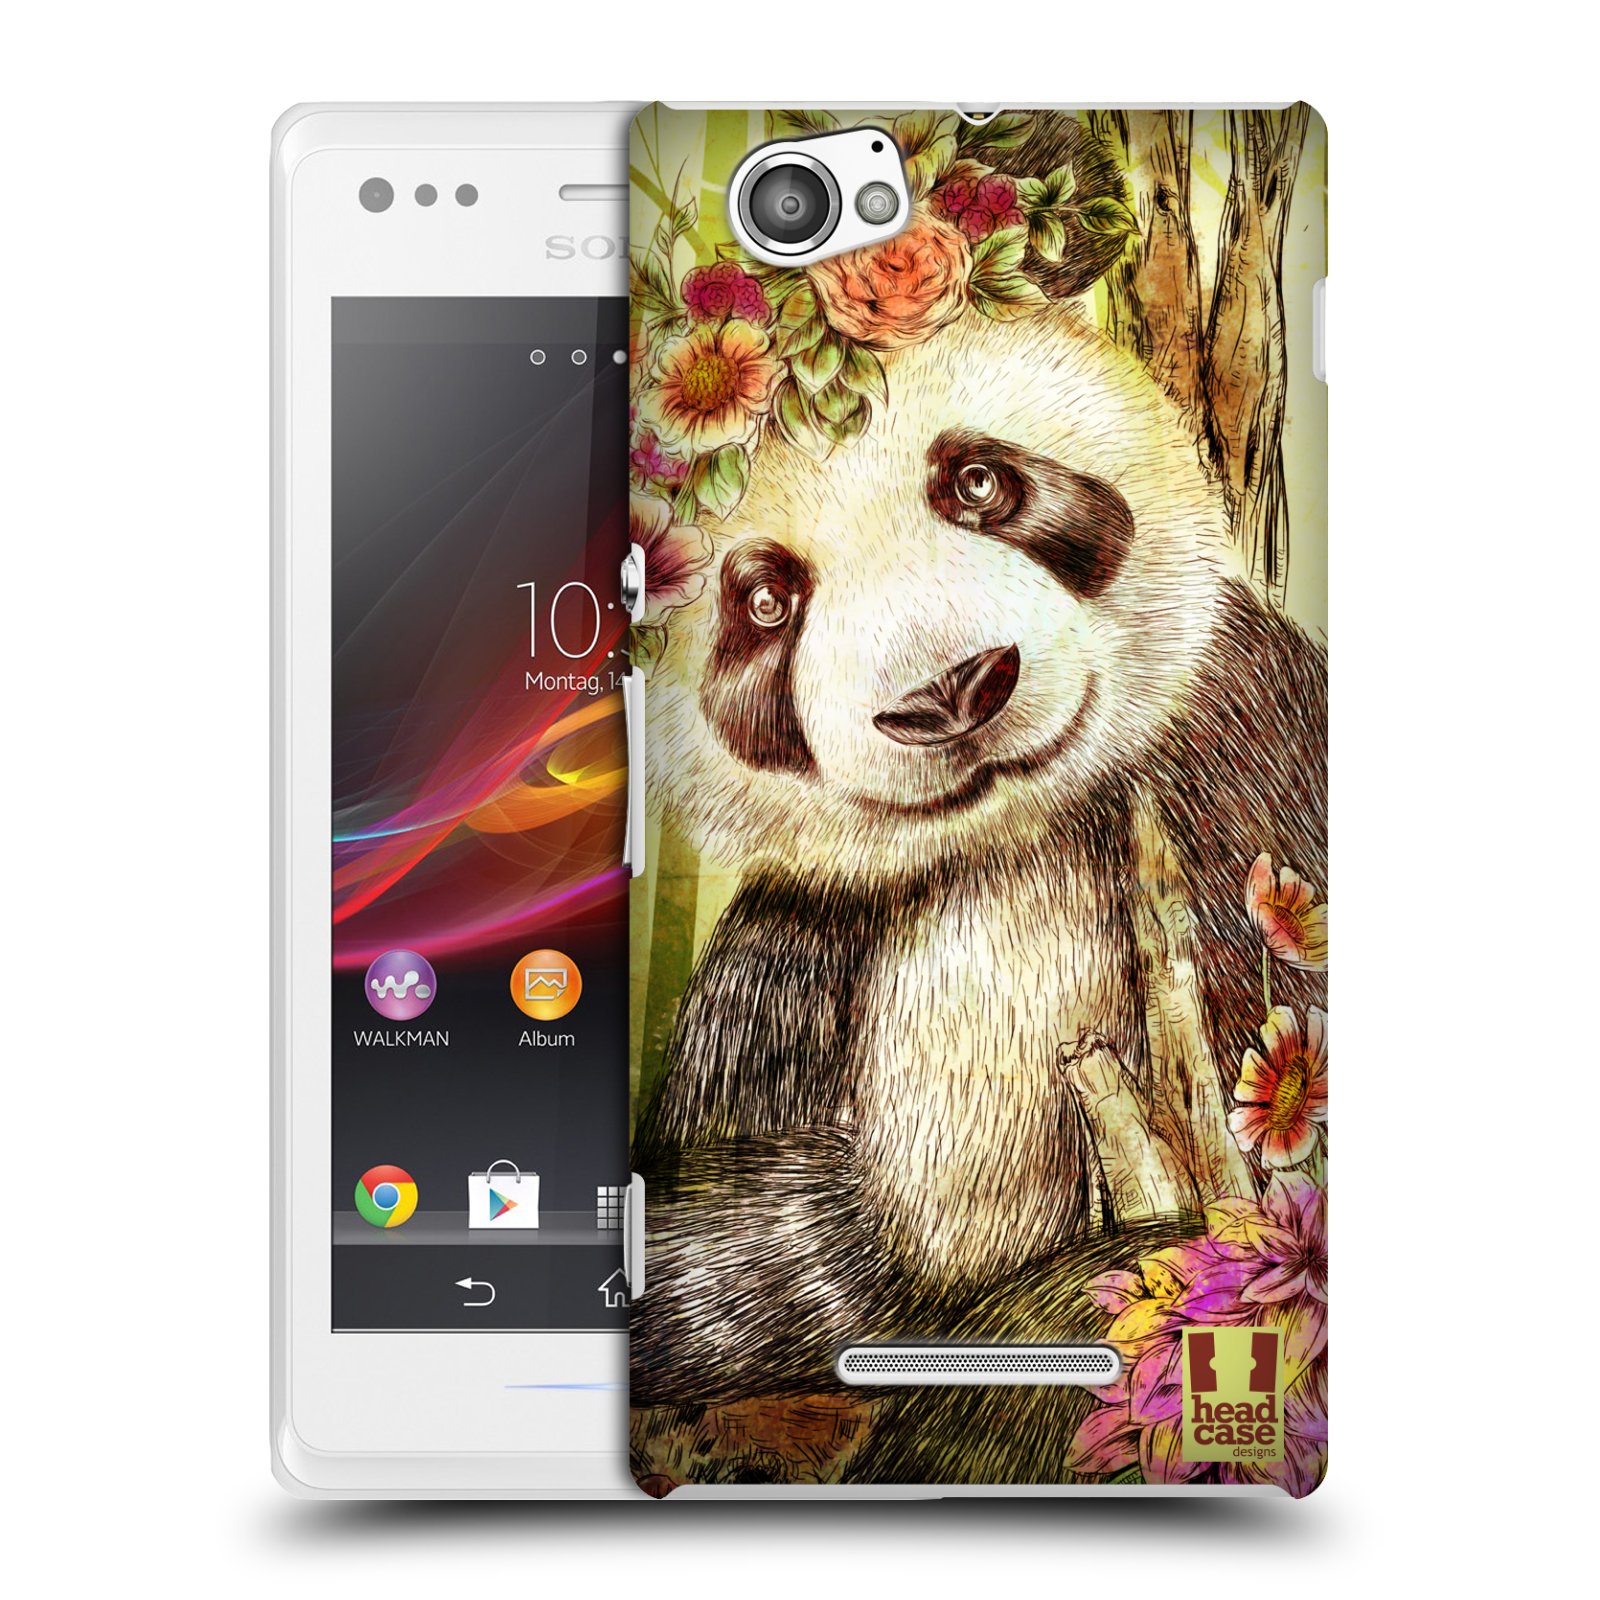 HEAD CASE plastový obal na mobil Sony Xperia M vzor Květinová zvířáta MEDVÍDEK PANDA